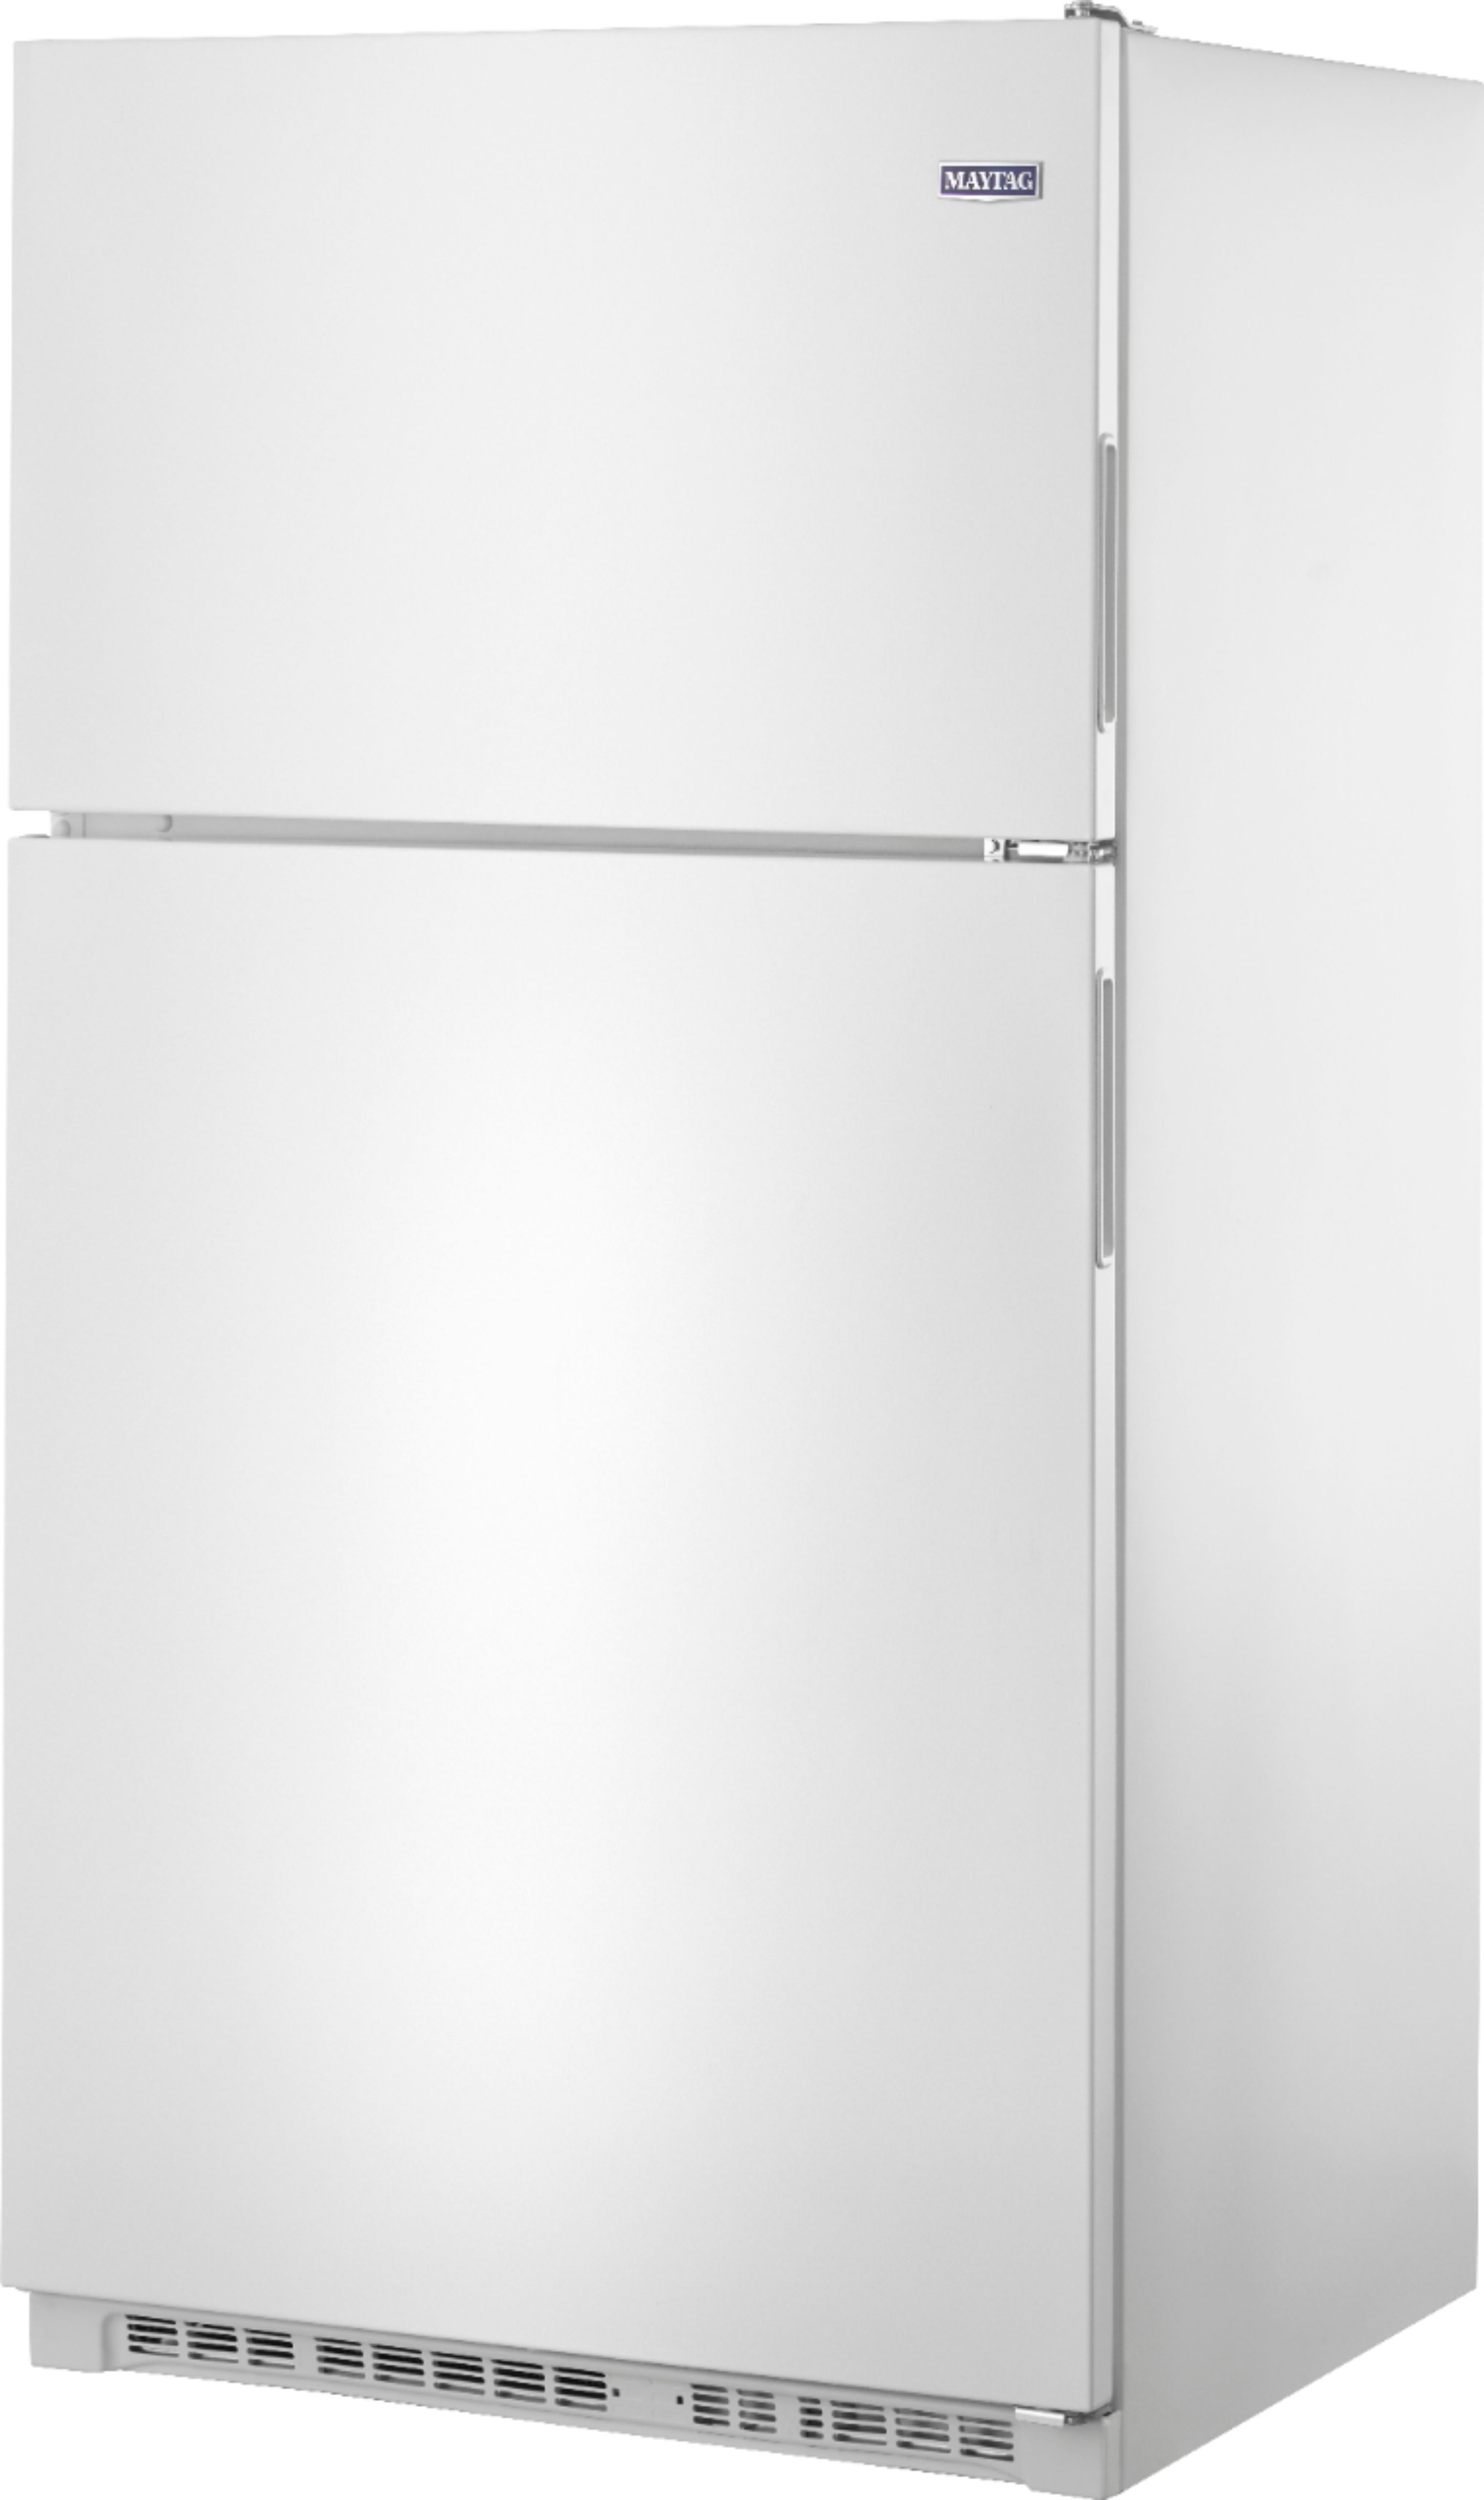 Left View: Whirlpool - 19.2 Cu. Ft. Top-Freezer Refrigerator - White